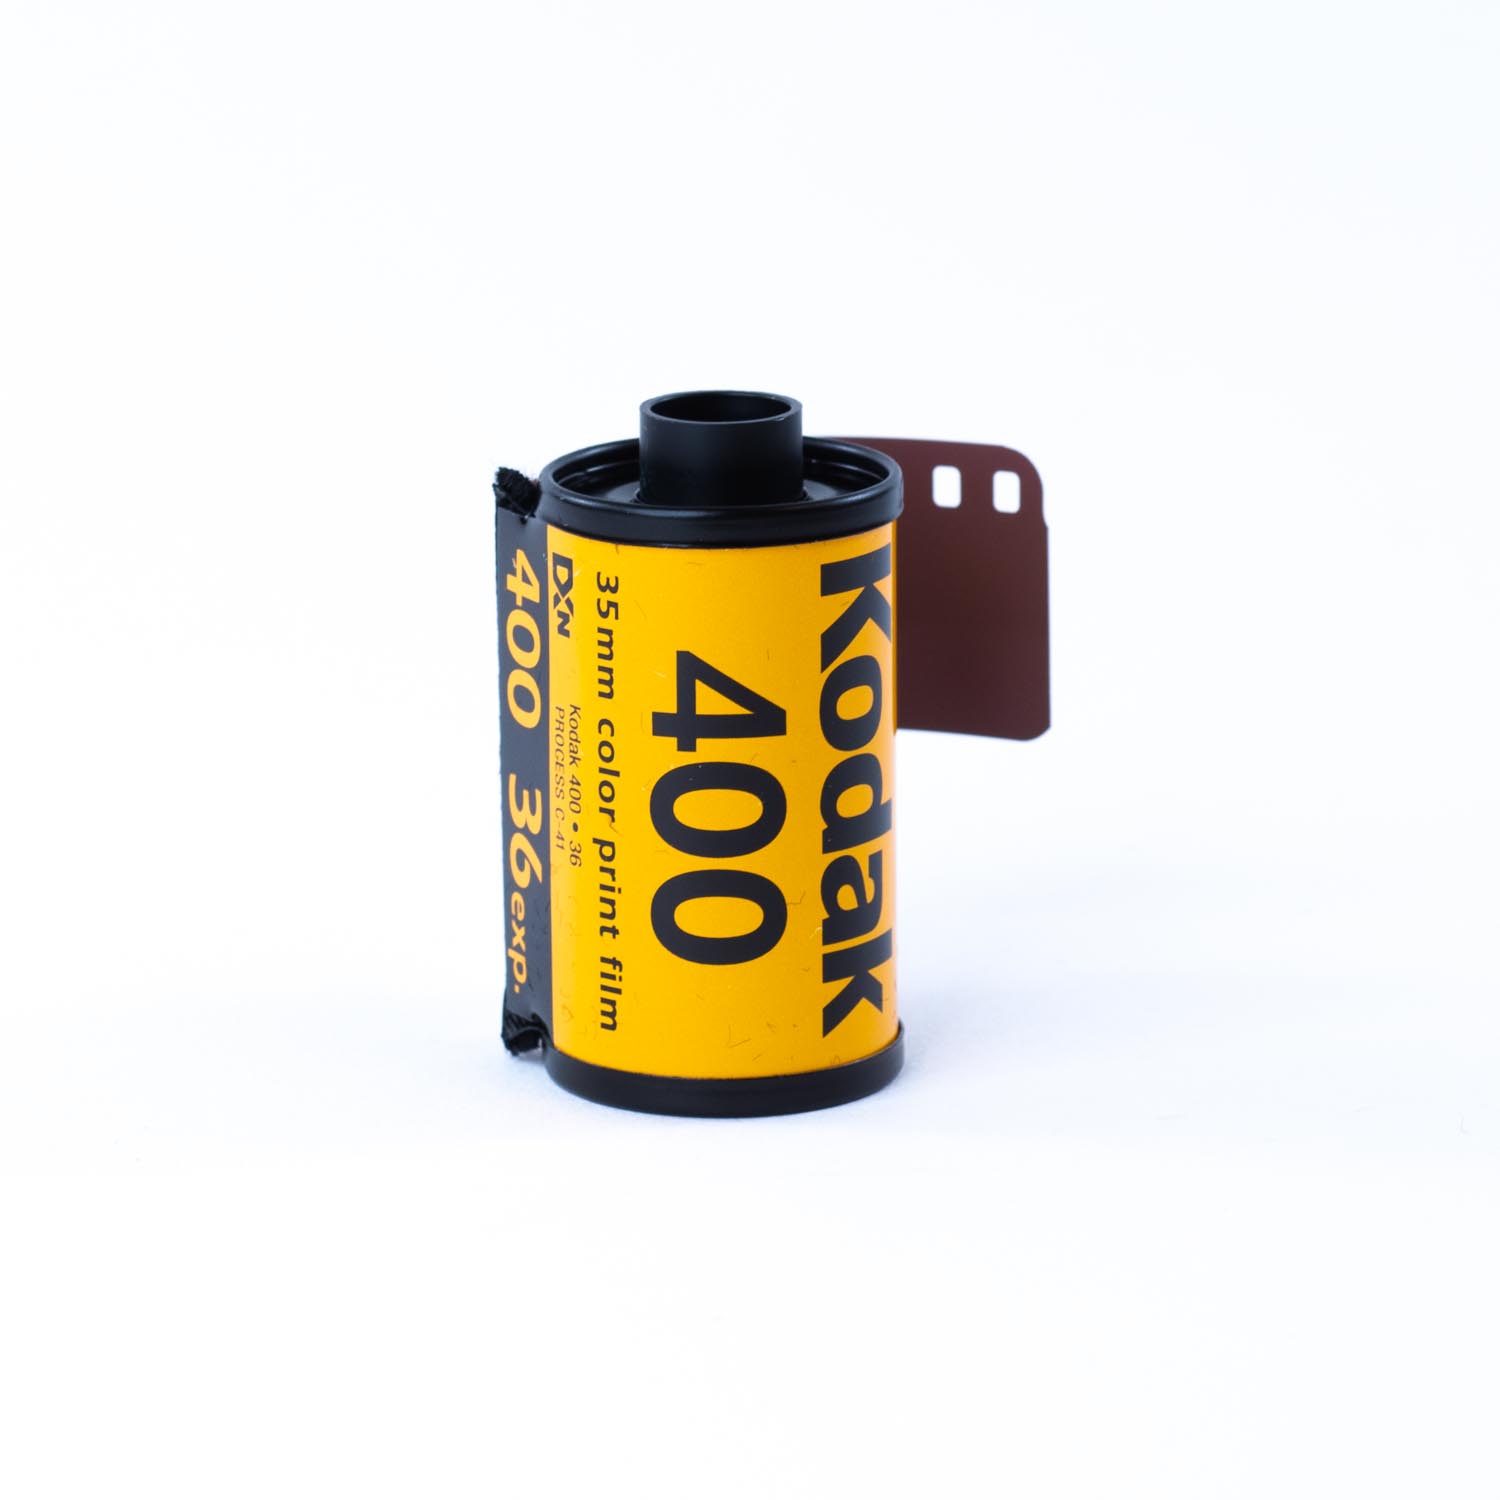 Kodak GC/UltraMax 400 Color Negative Film (35mm Roll, 36 Exposures